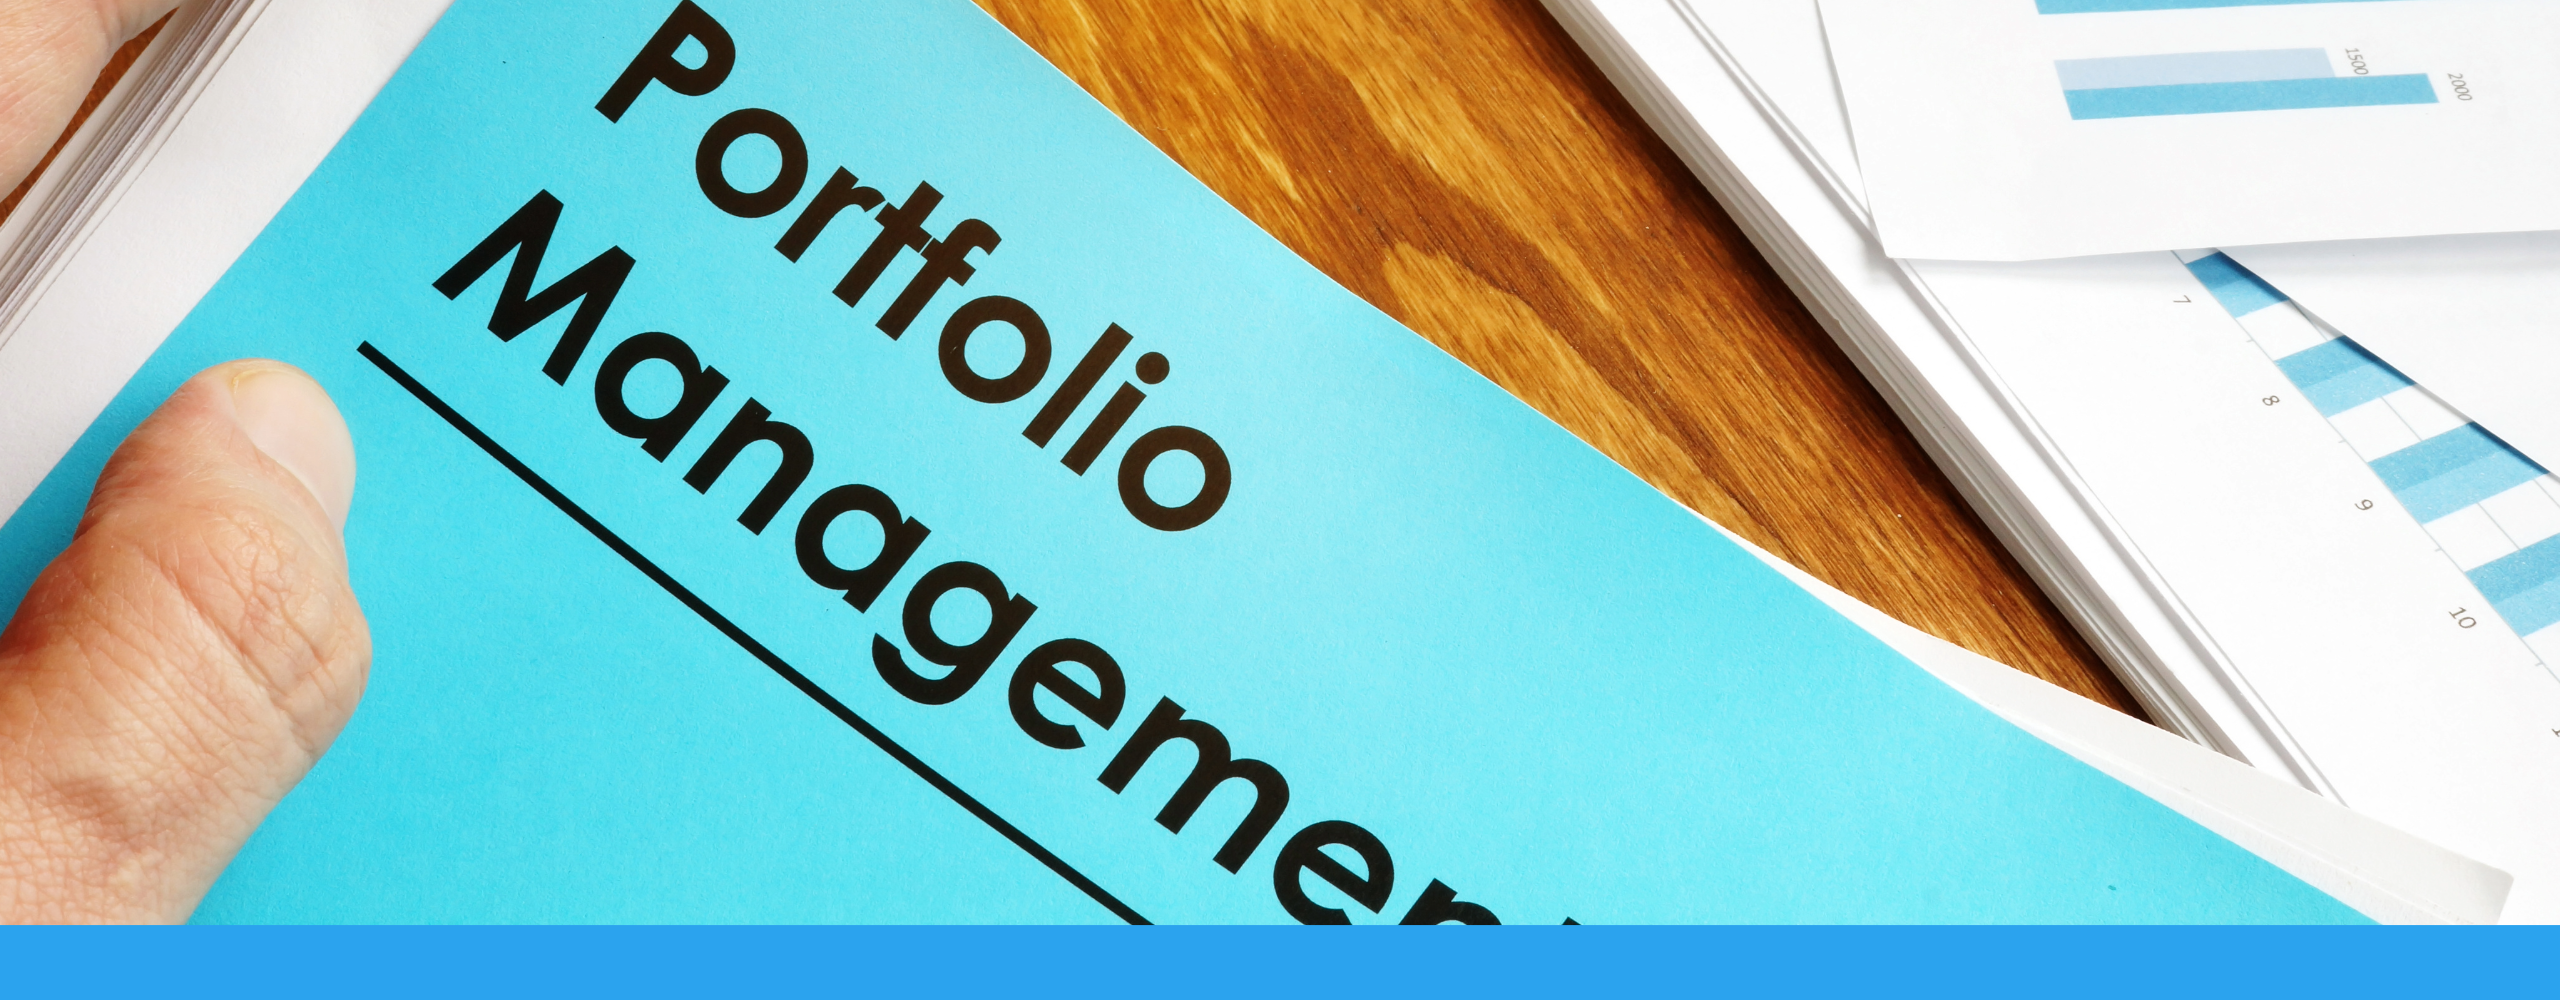 Image of a document that says portfolio management.